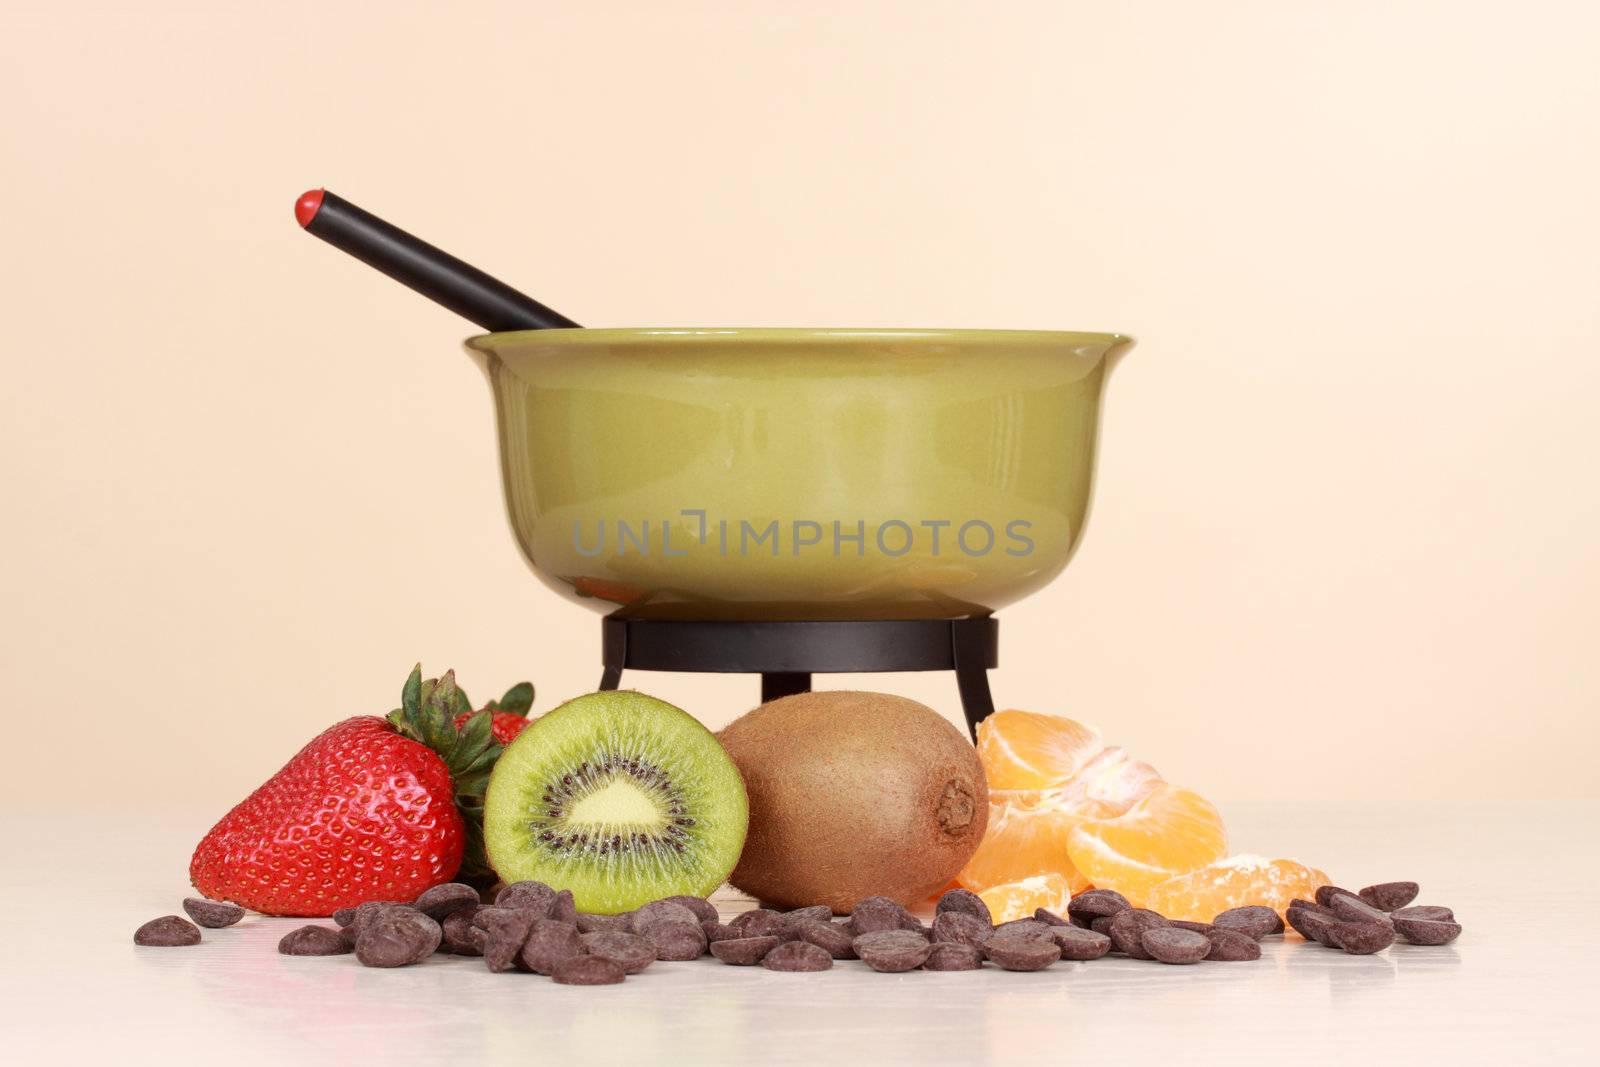 chocolate fondue kit and fresh fruit, beige background